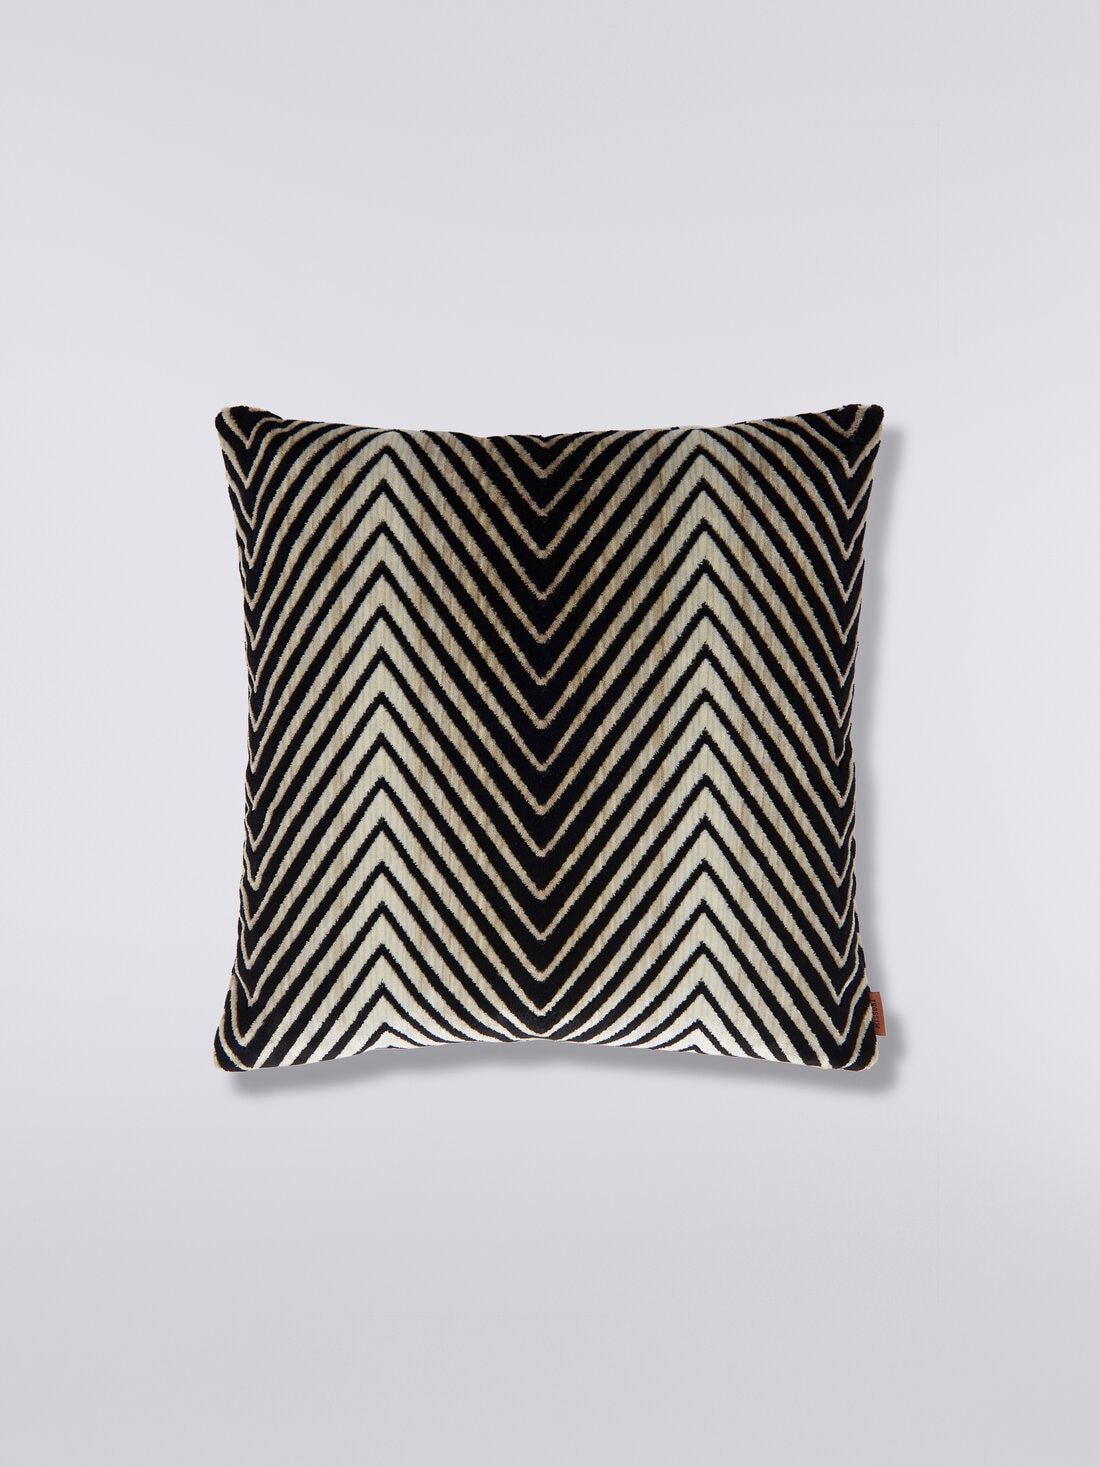 Ziggy 40x40 cm viscose blend zigzag cushion, Black & White - 8051575831270 - 0